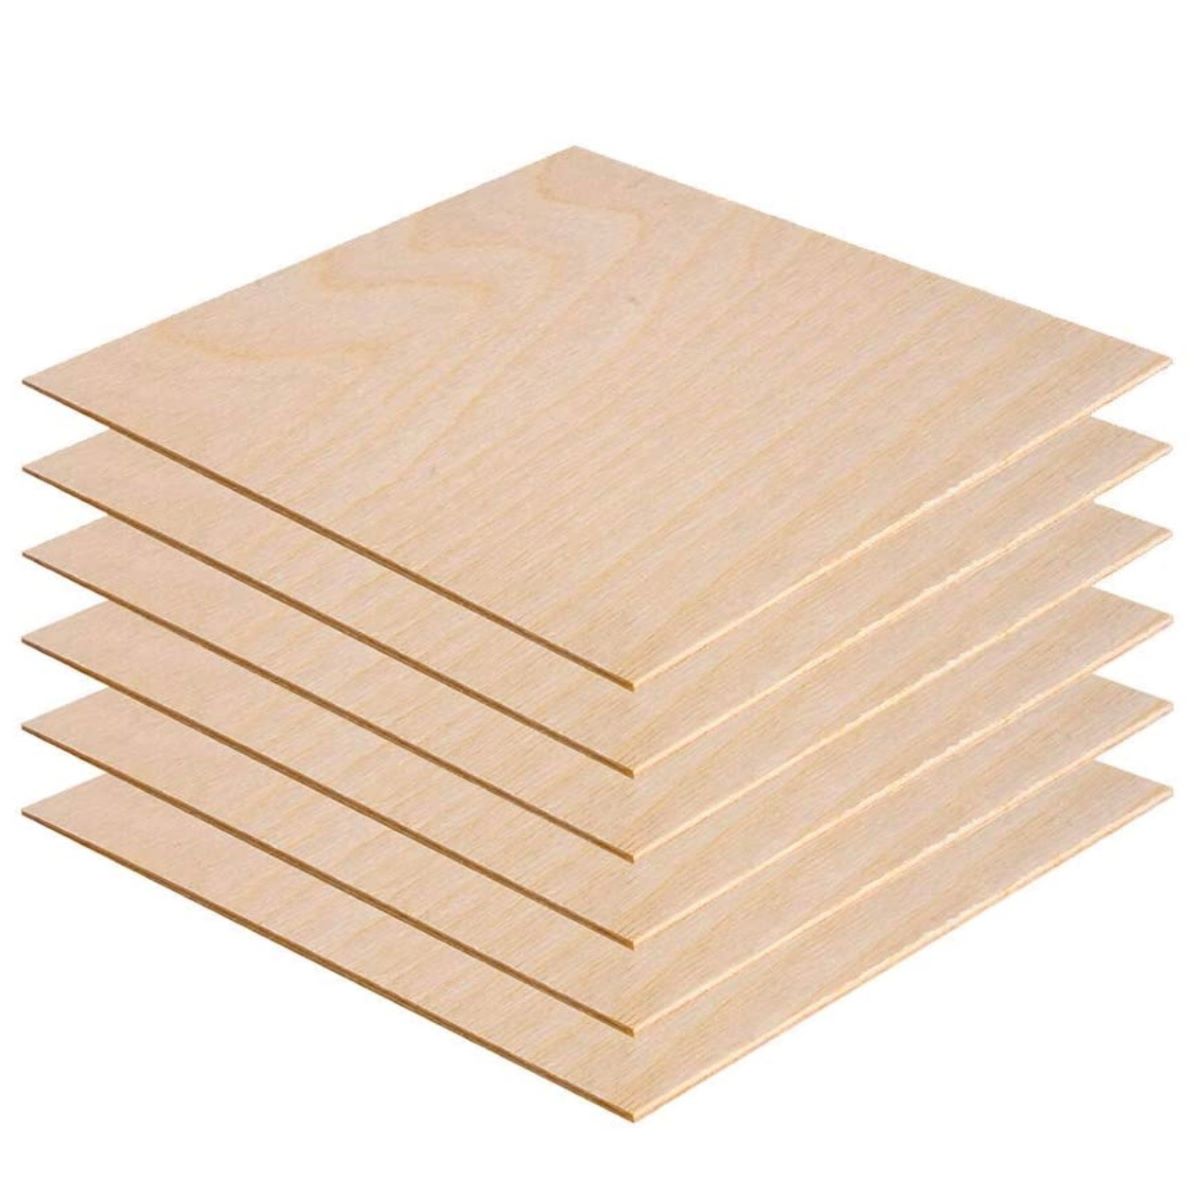 birch plywood panels